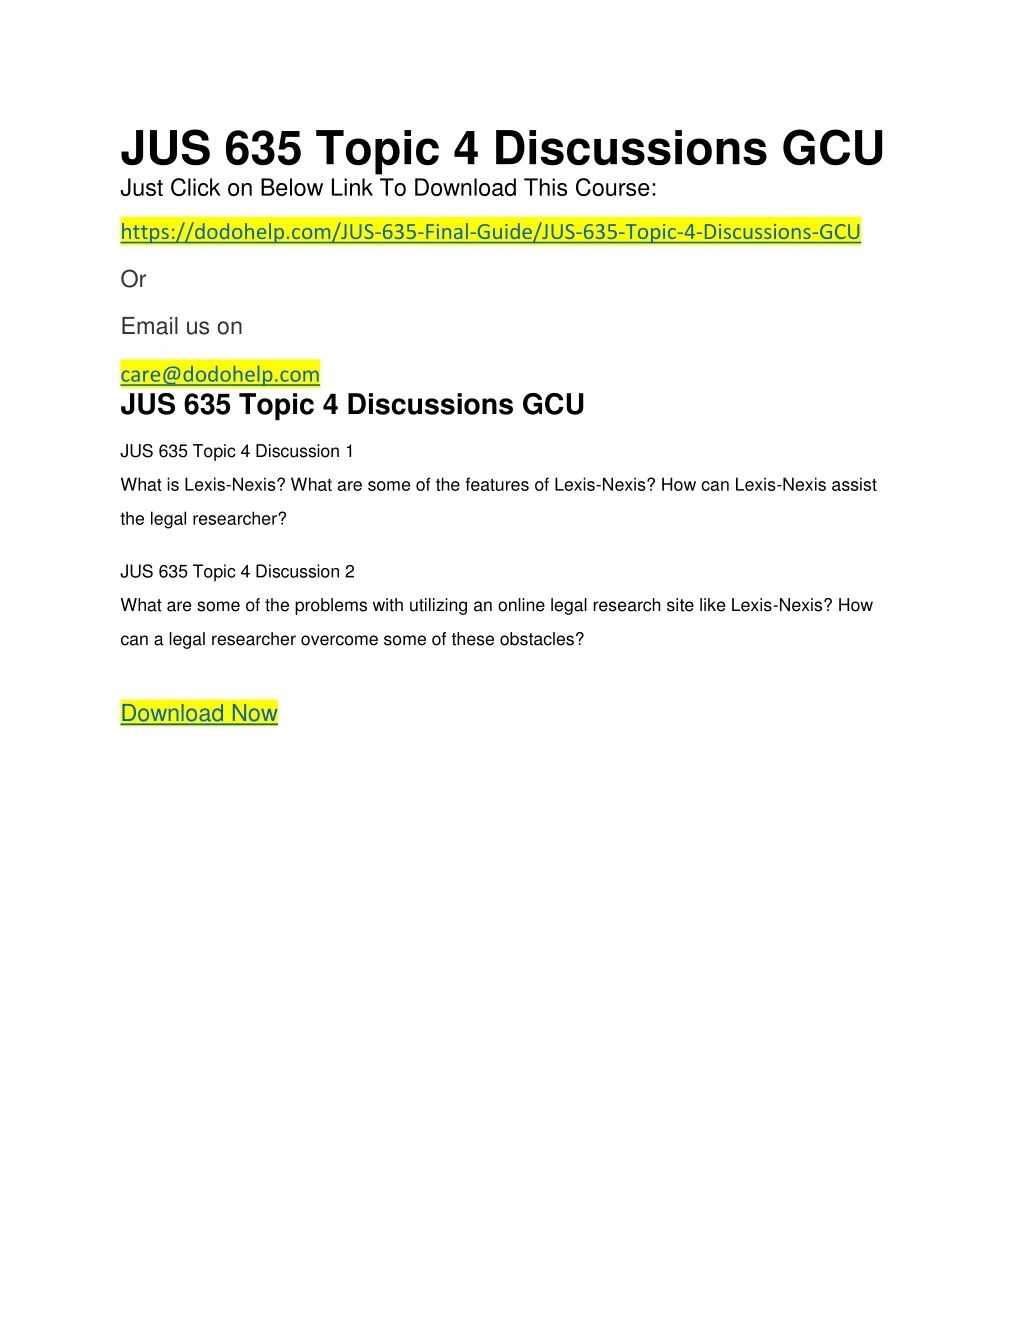 jus 635 topic 4 discussions gcu just click